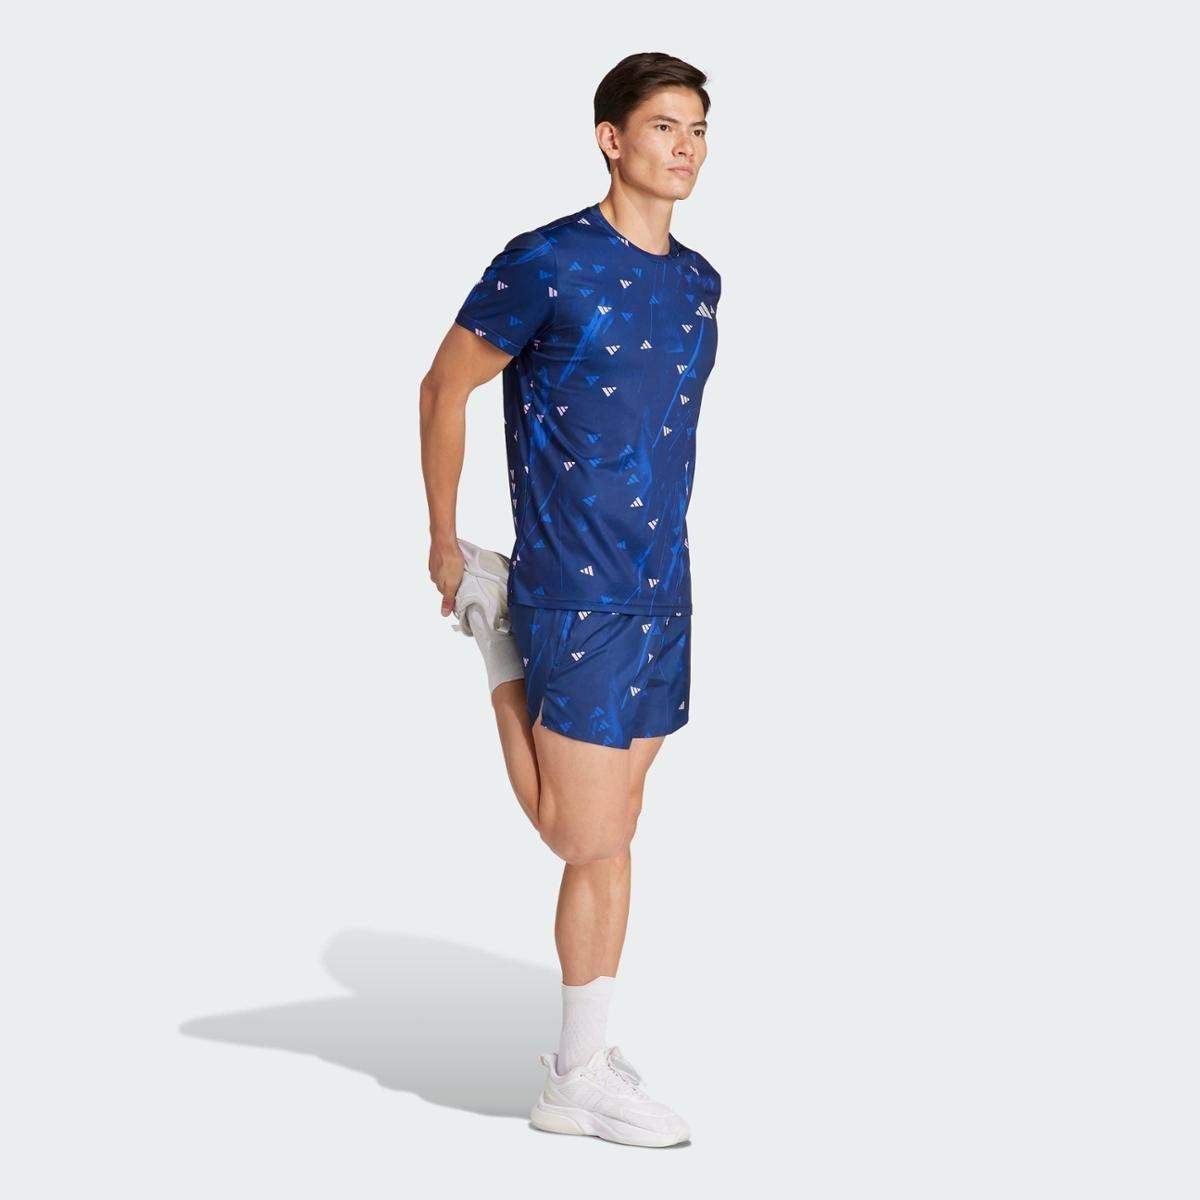 Camiseta Run It Brand Love Adidas Masculina - Azul